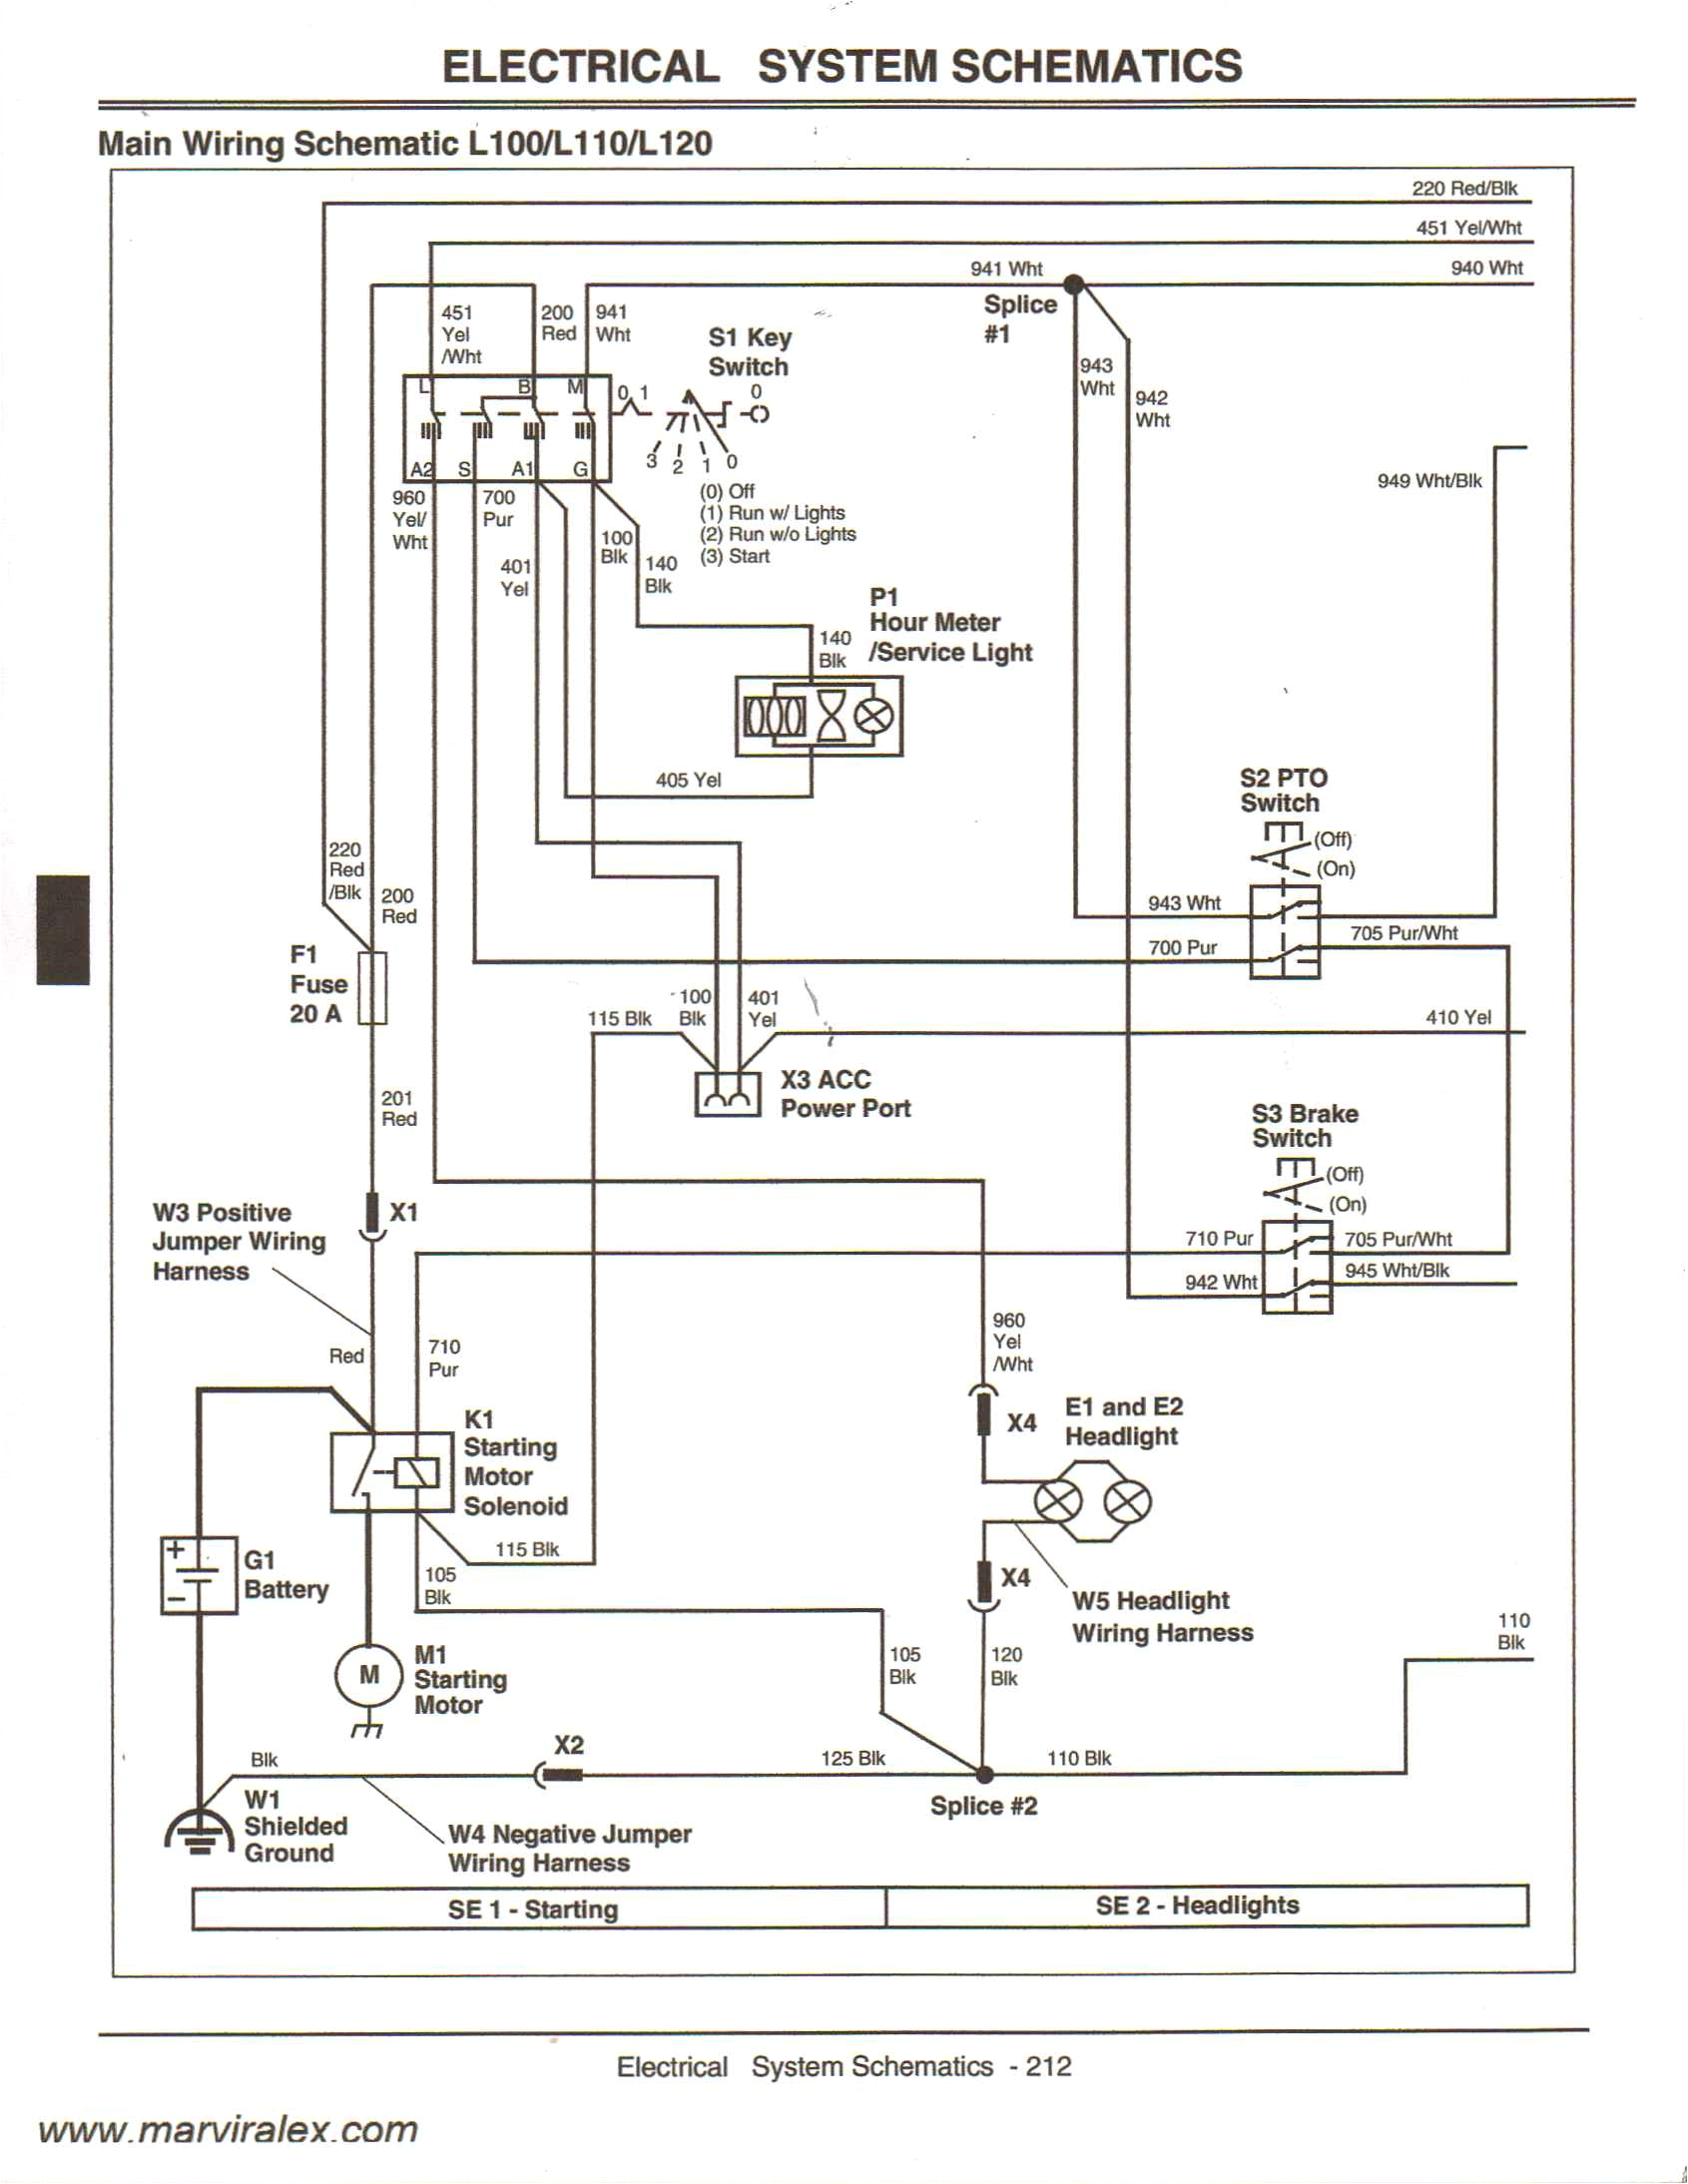 john deere 105 wiring diagram wiring diagrams second wiring diagram free schematic diagram 07 01 2009 08 01 2009 john deere